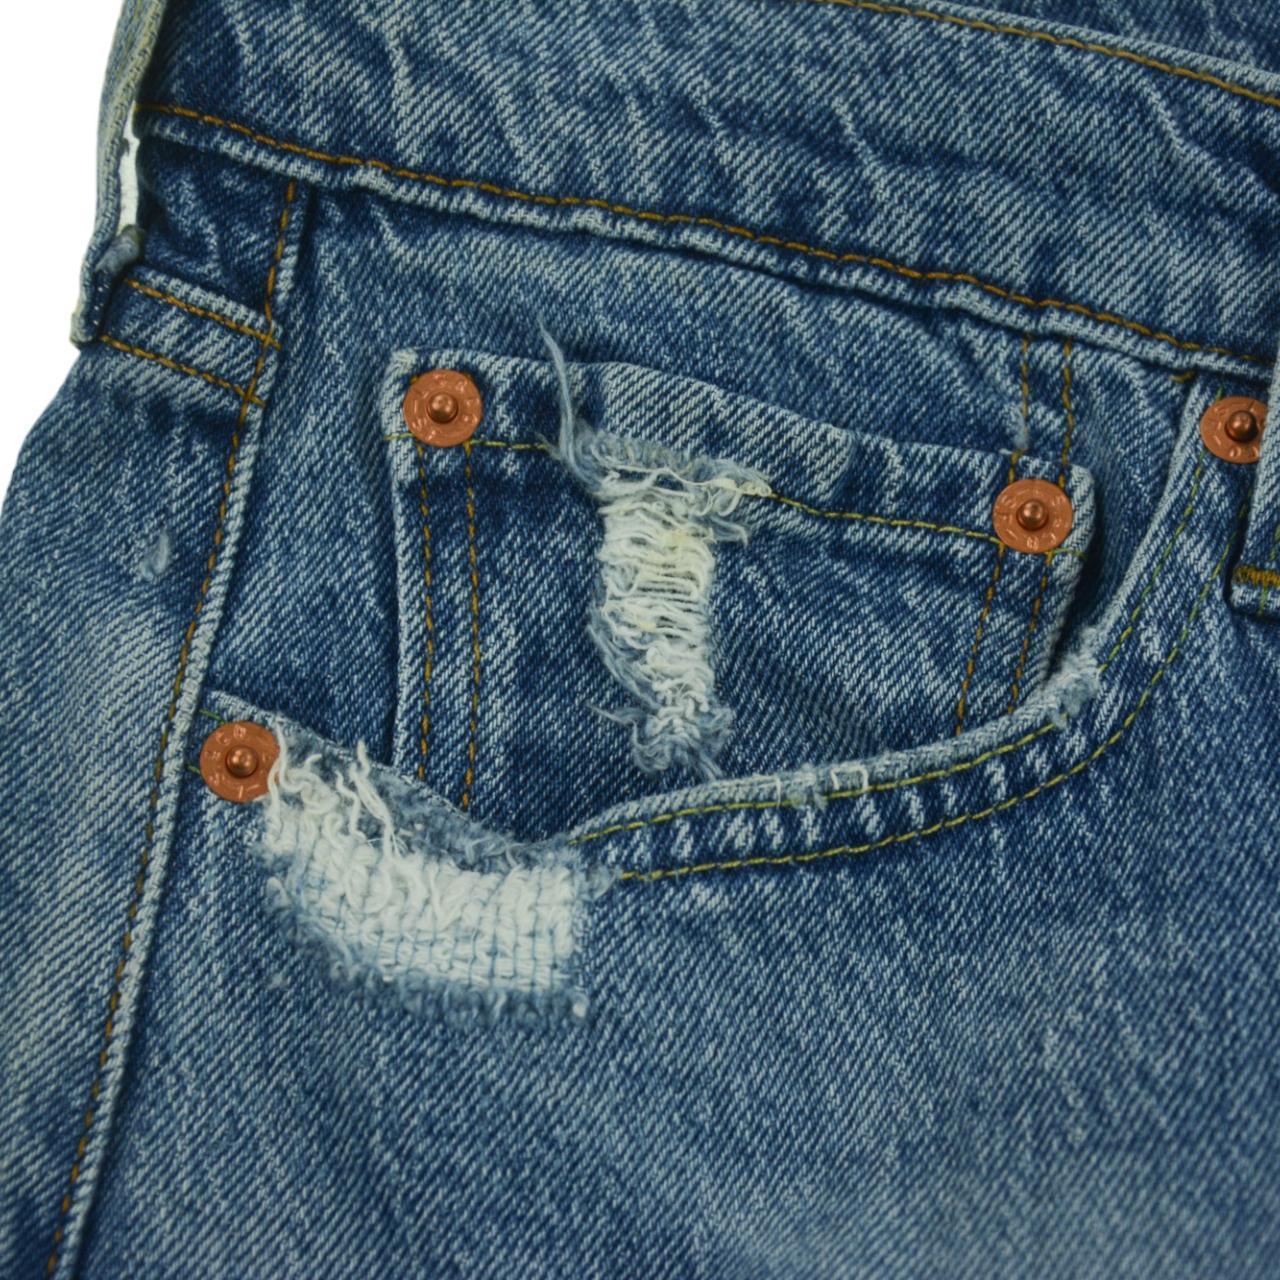 Vintage Levi's Jeans 510 Style Size W32 - Known Source